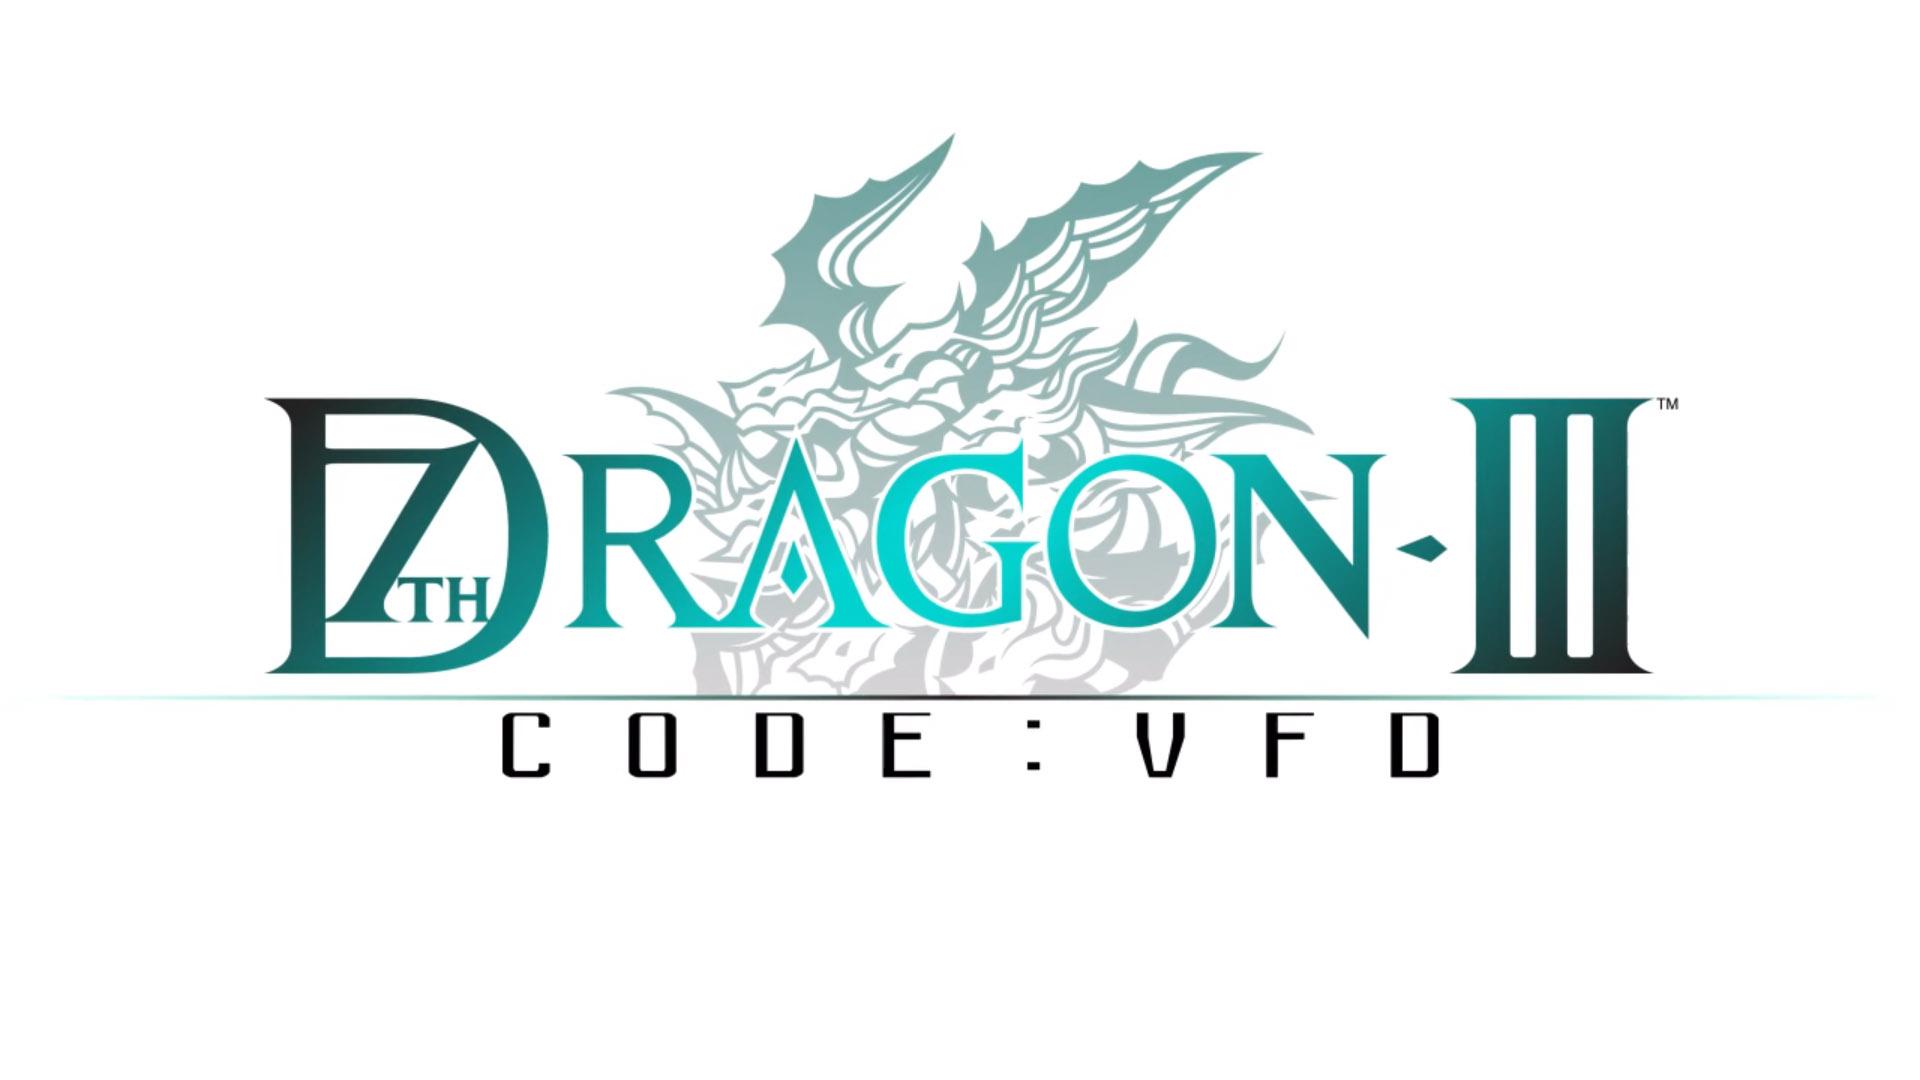 7th Dragon III Code: VFD tung trailer mới